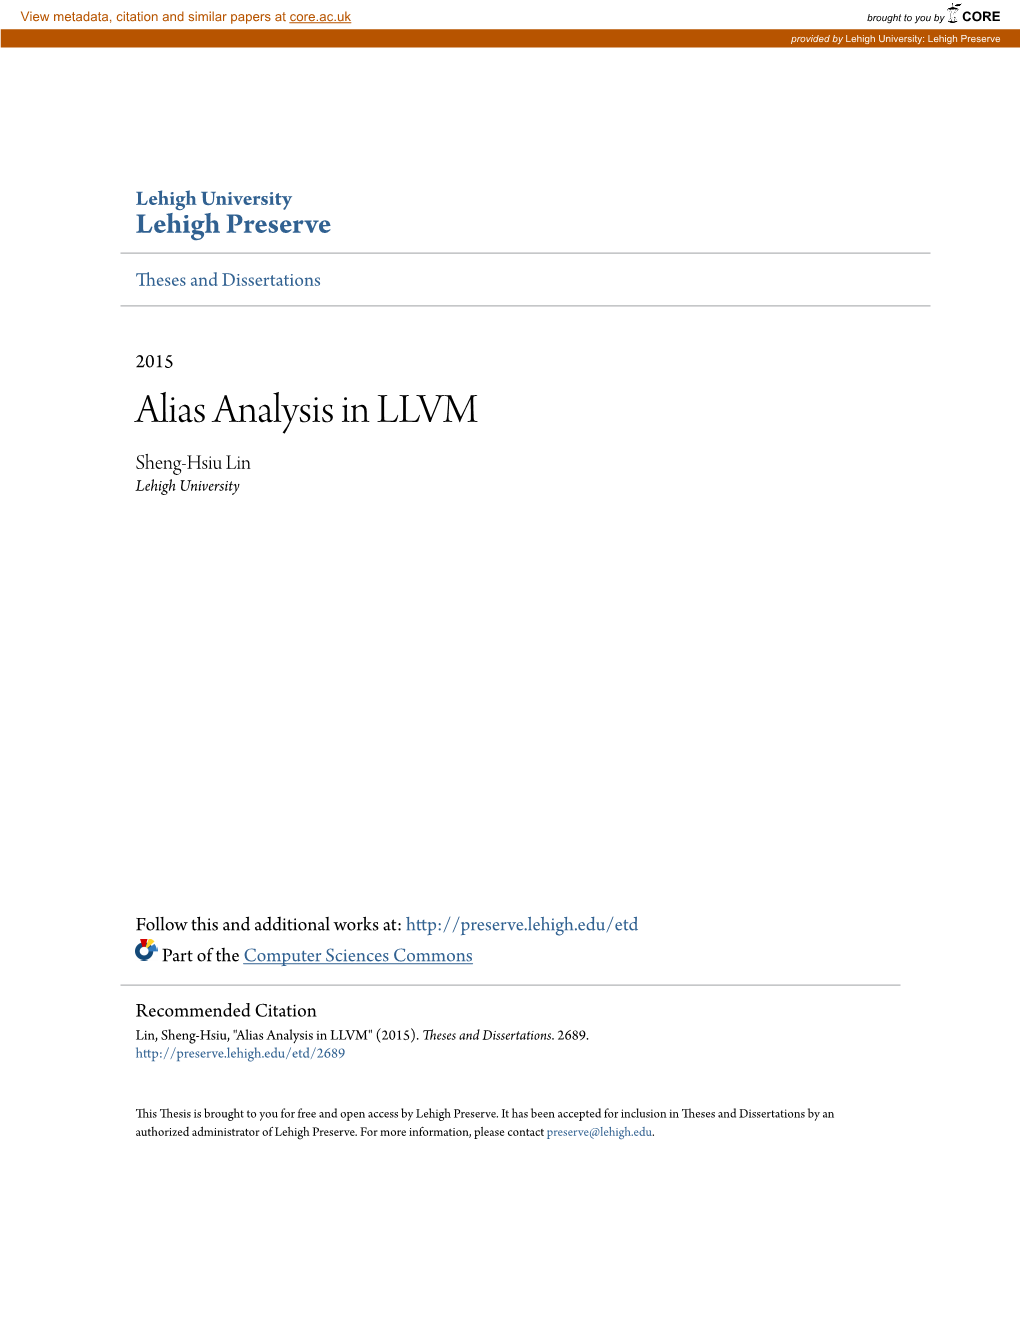 Alias Analysis in LLVM Sheng-Hsiu Lin Lehigh University